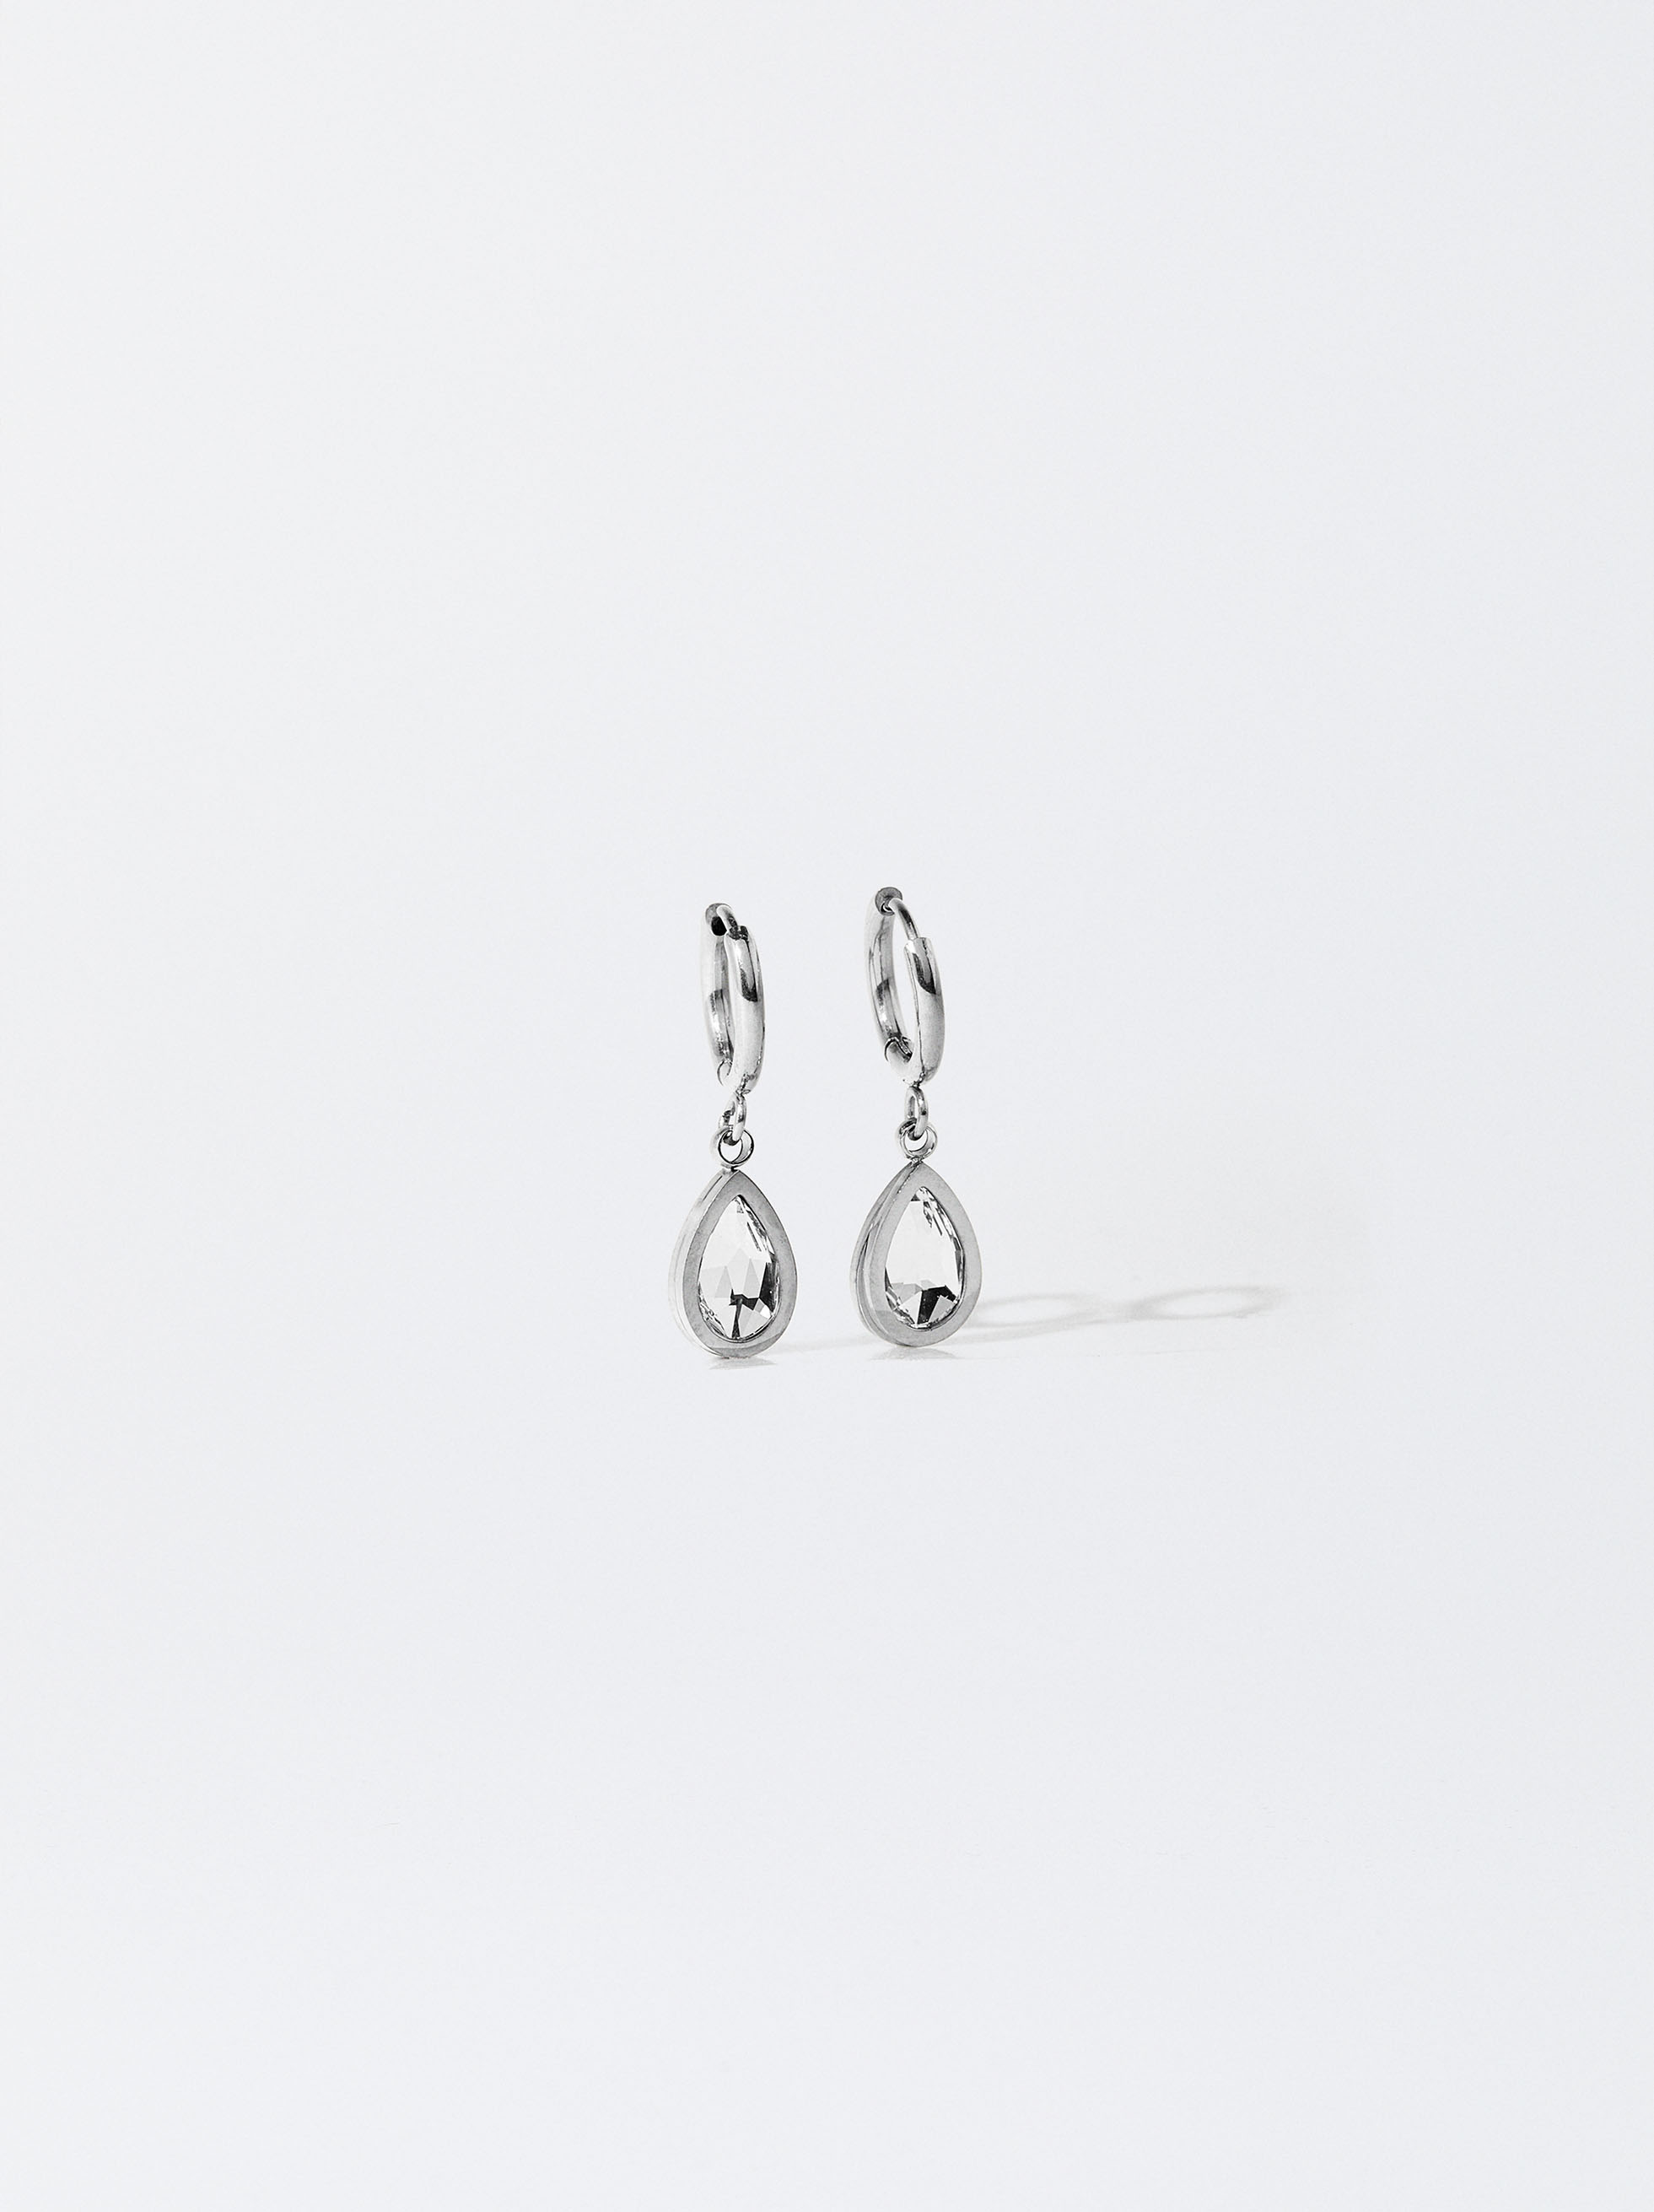 Stainless Steel Hoop Earrings With Crystals image number 0.0